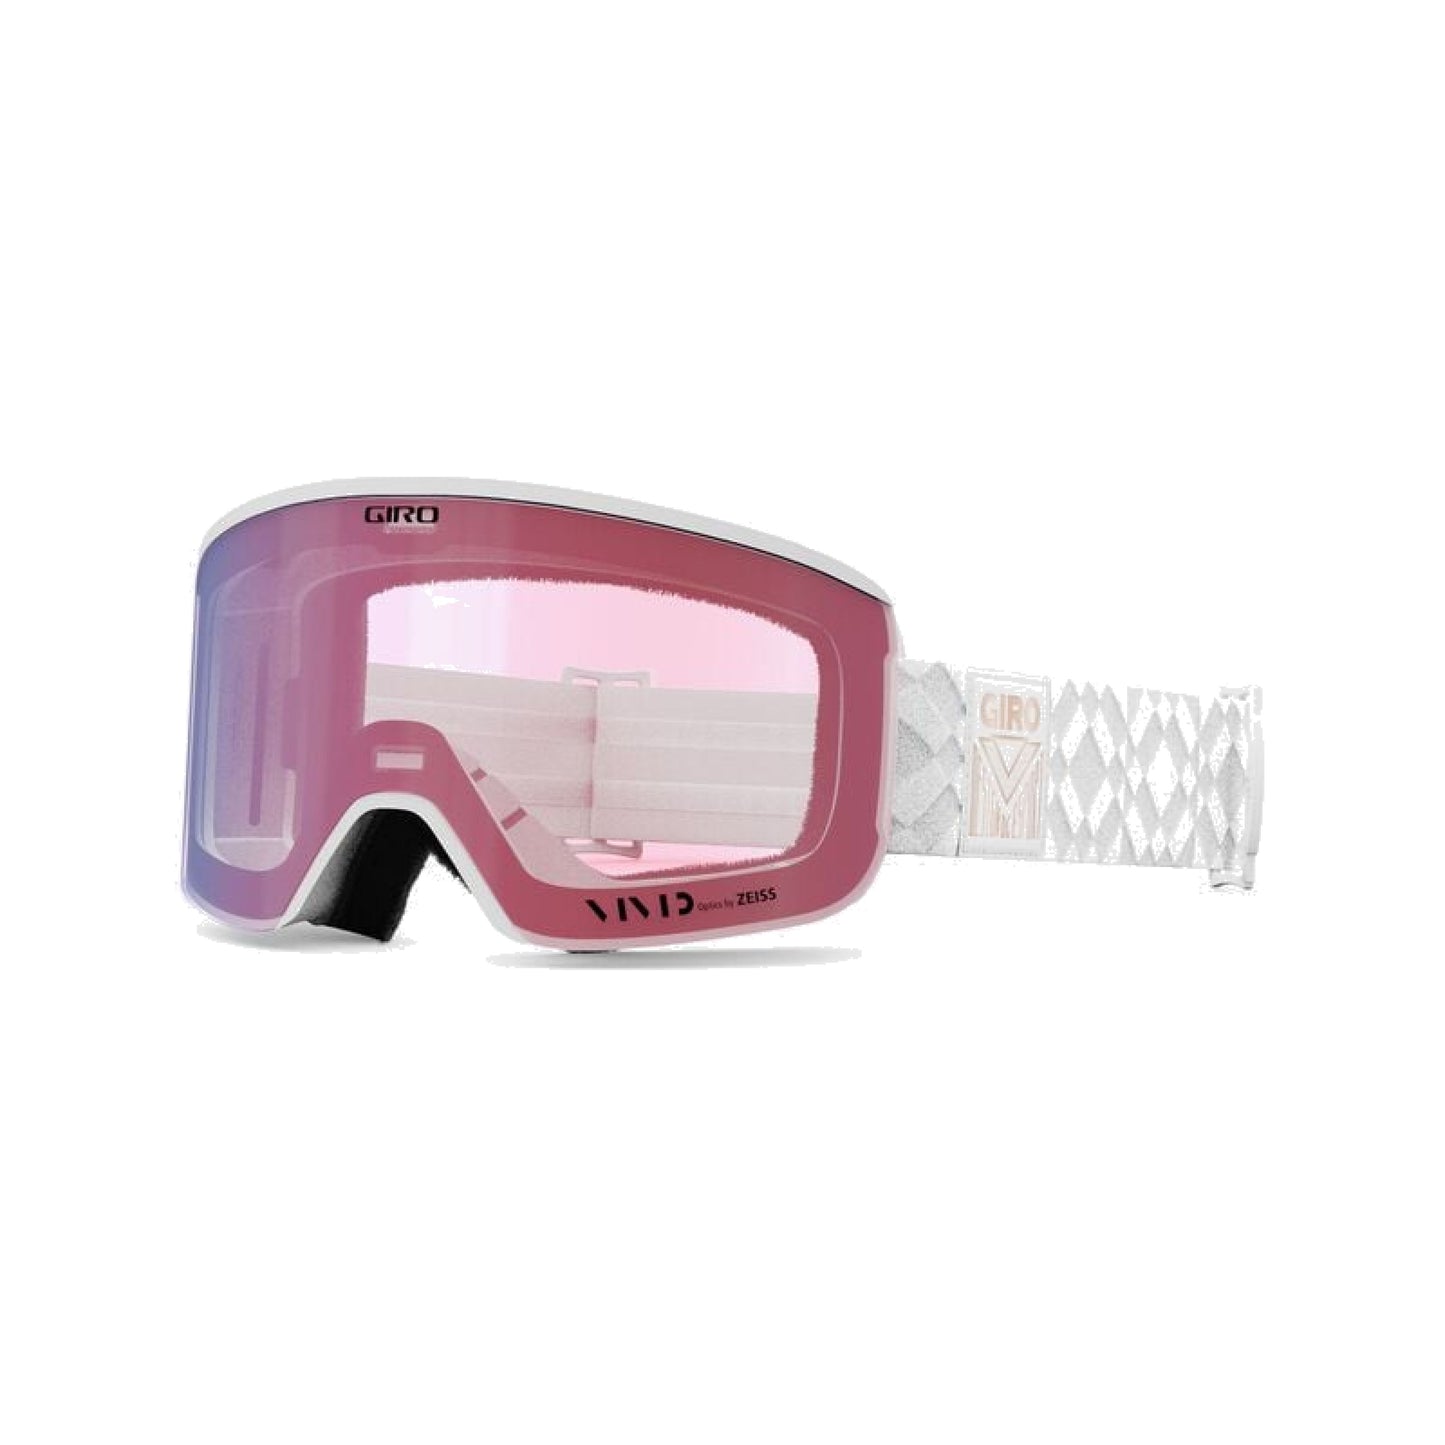 Giro Women's Ella Snow Goggles White Limitless Vivid Rose Gold Snow Goggles